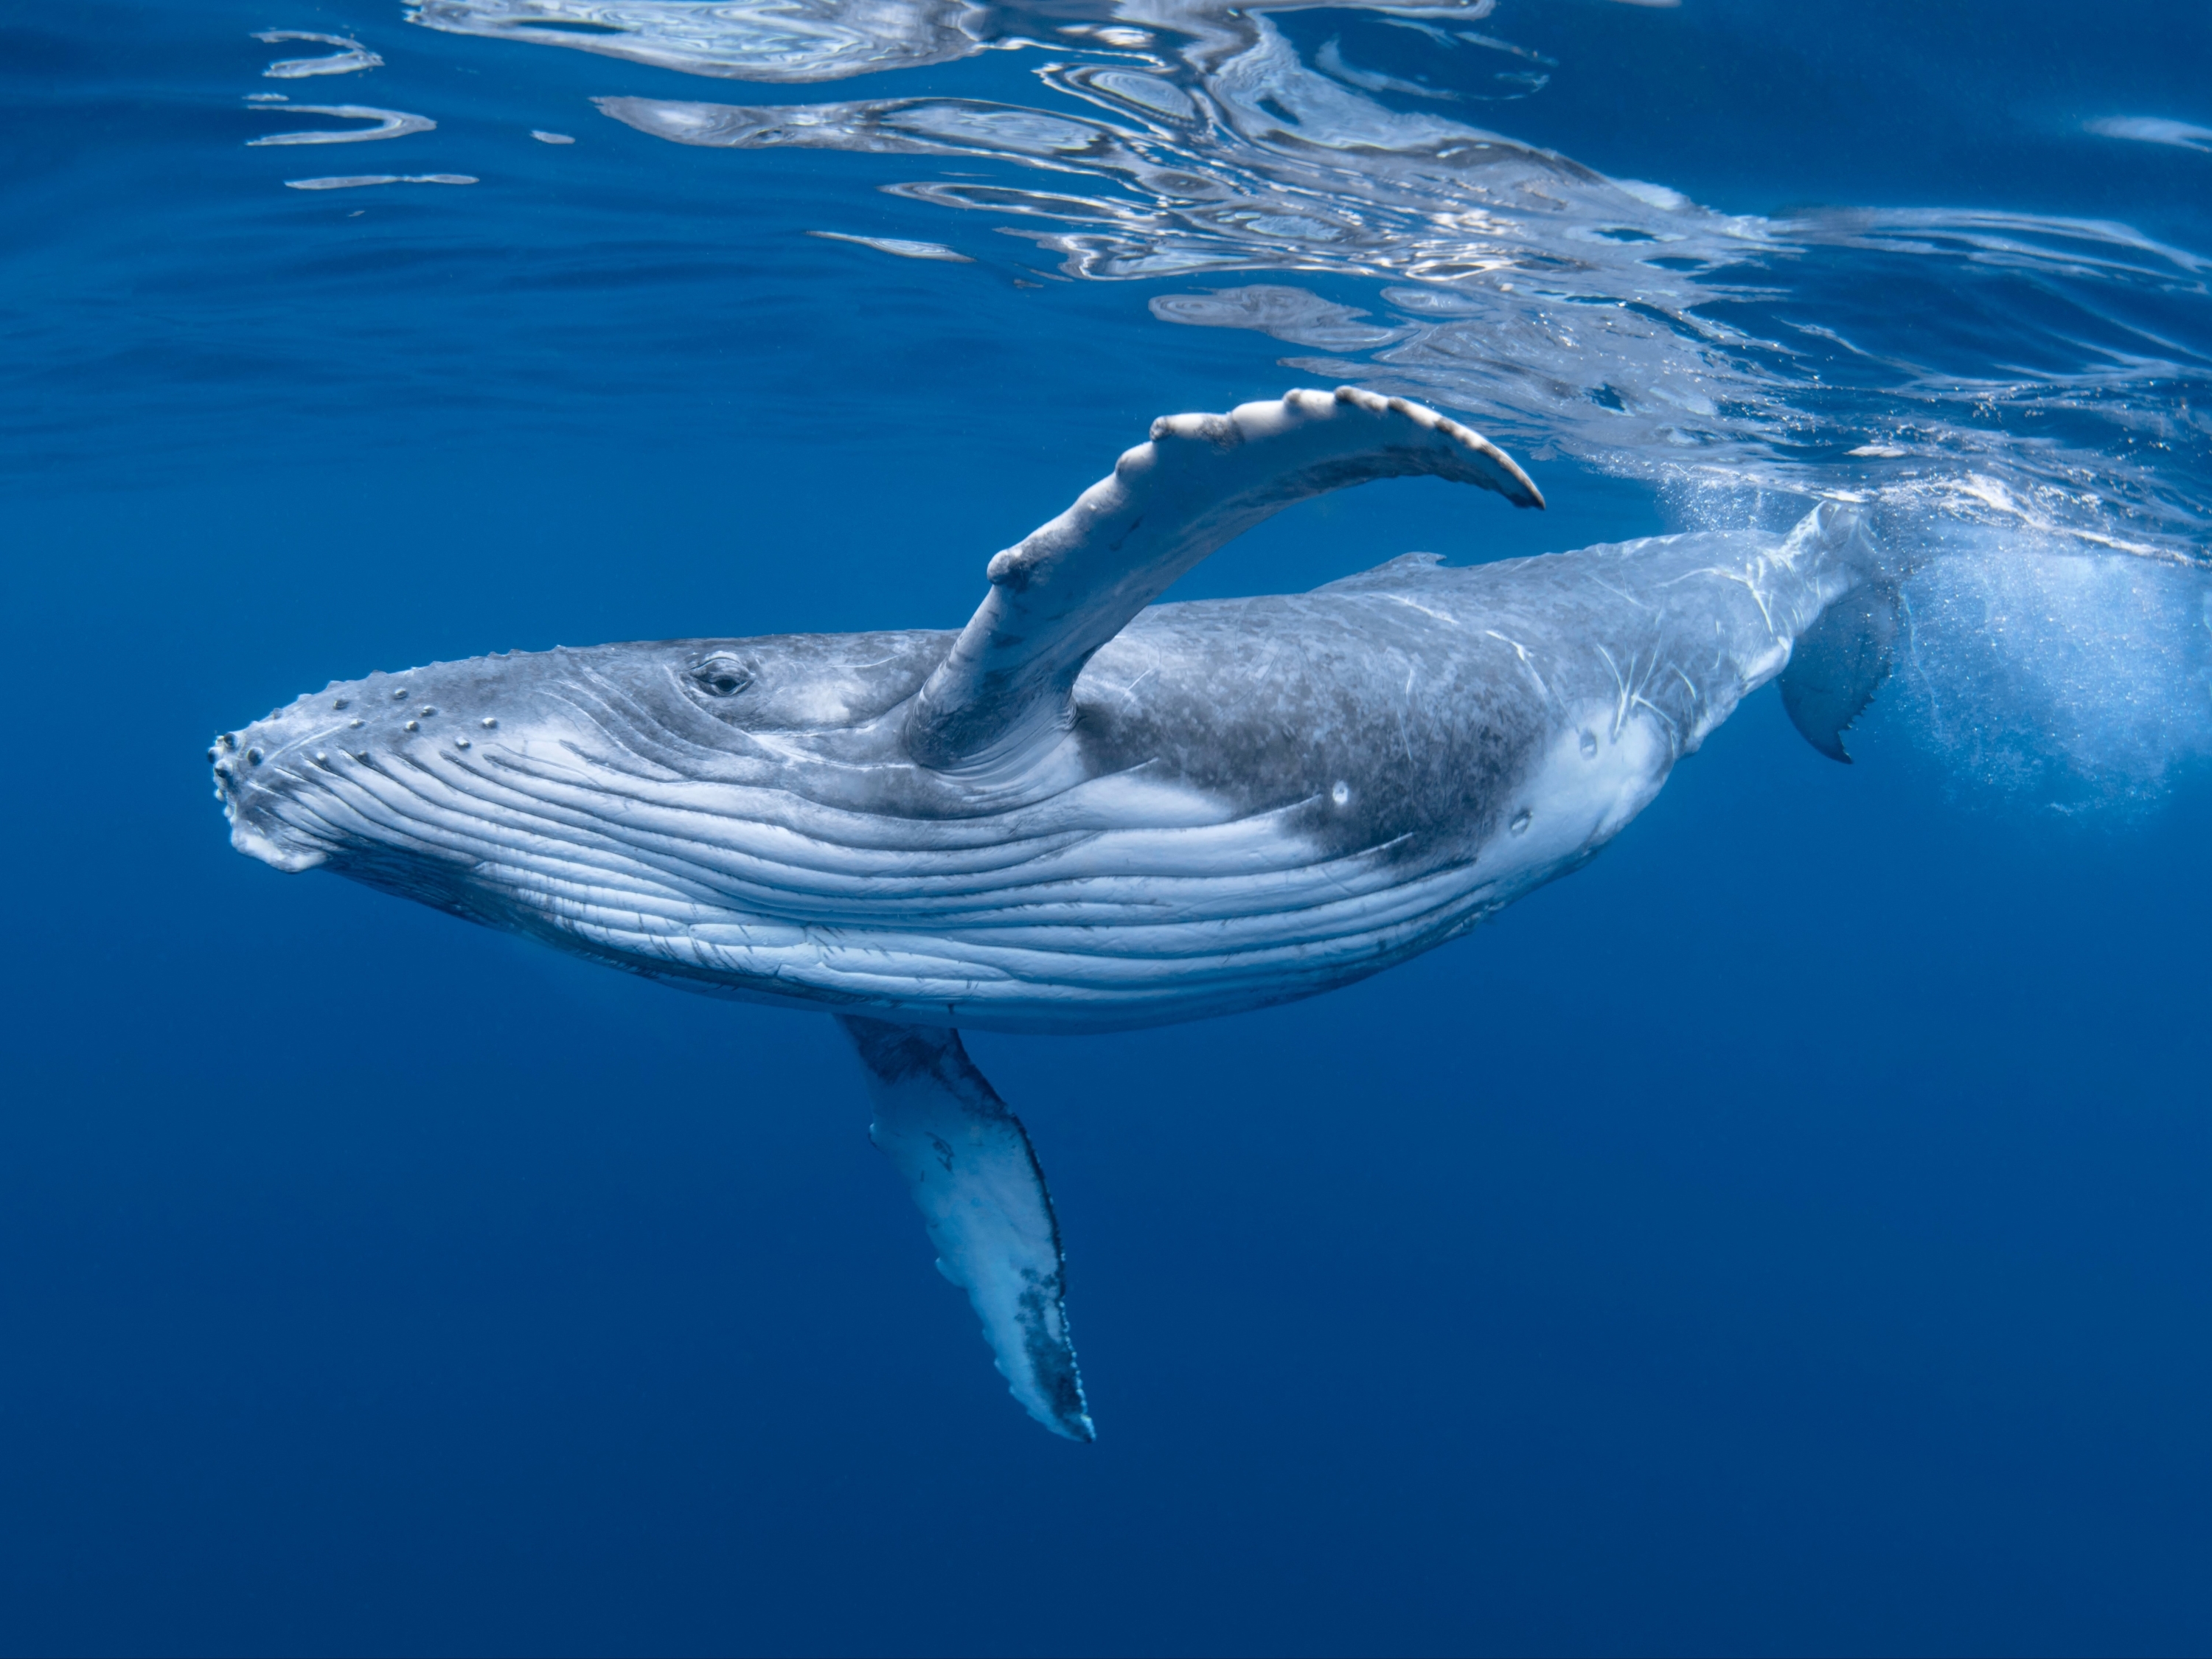 24,193 Whale Wallpaper Images, Stock Photos & Vectors | Shutterstock